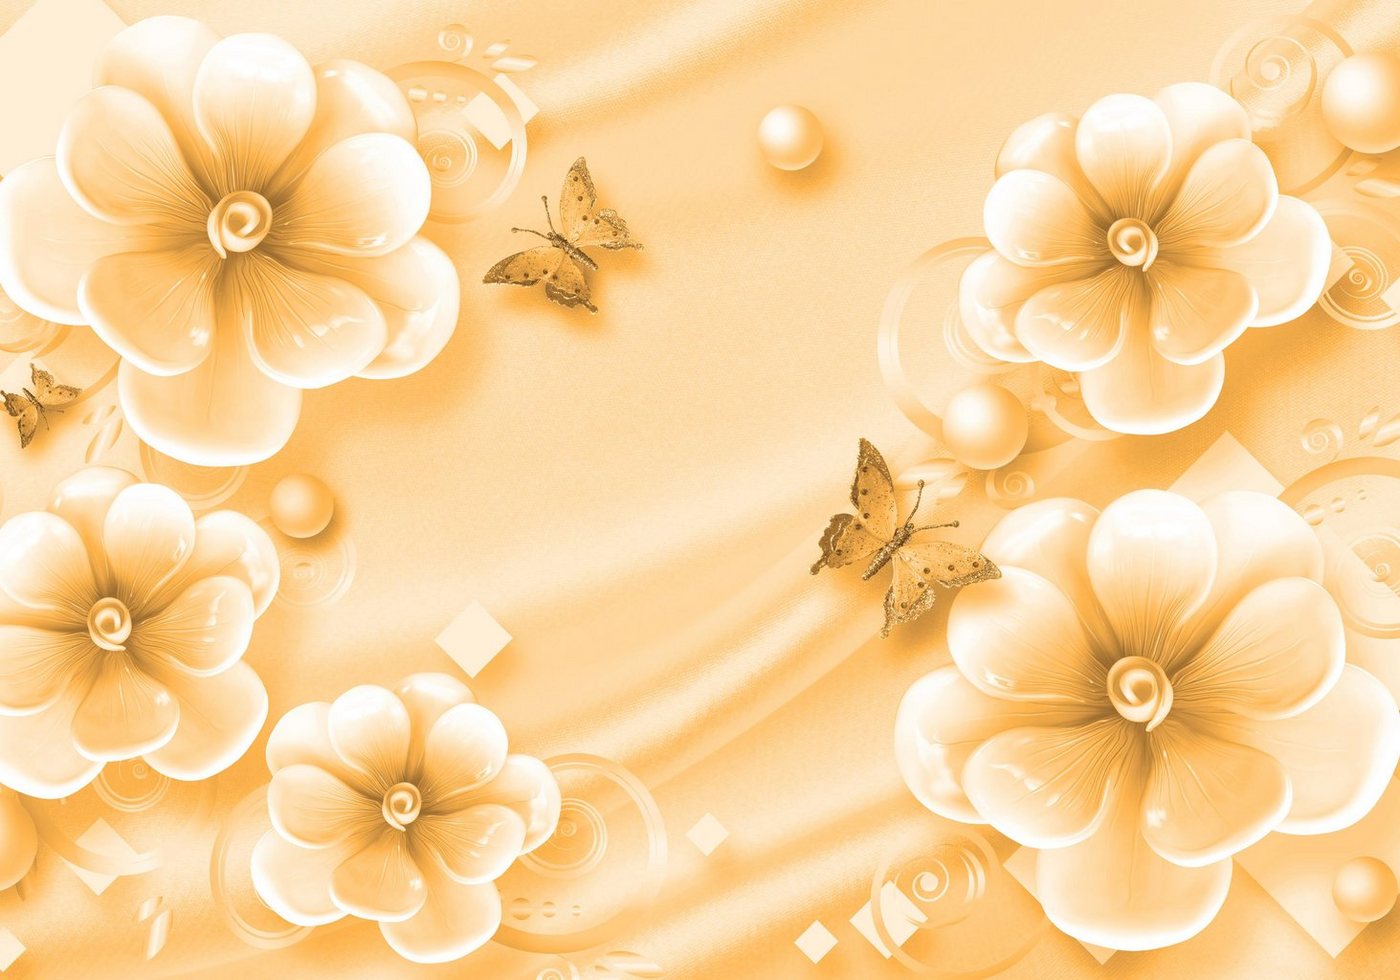 wandmotiv24 Fototapete Blumen Schmetterling Seide Perlen orange, glatt, Wandtapete, Motivtapete, matt, Vliestapete, selbstklebend von wandmotiv24